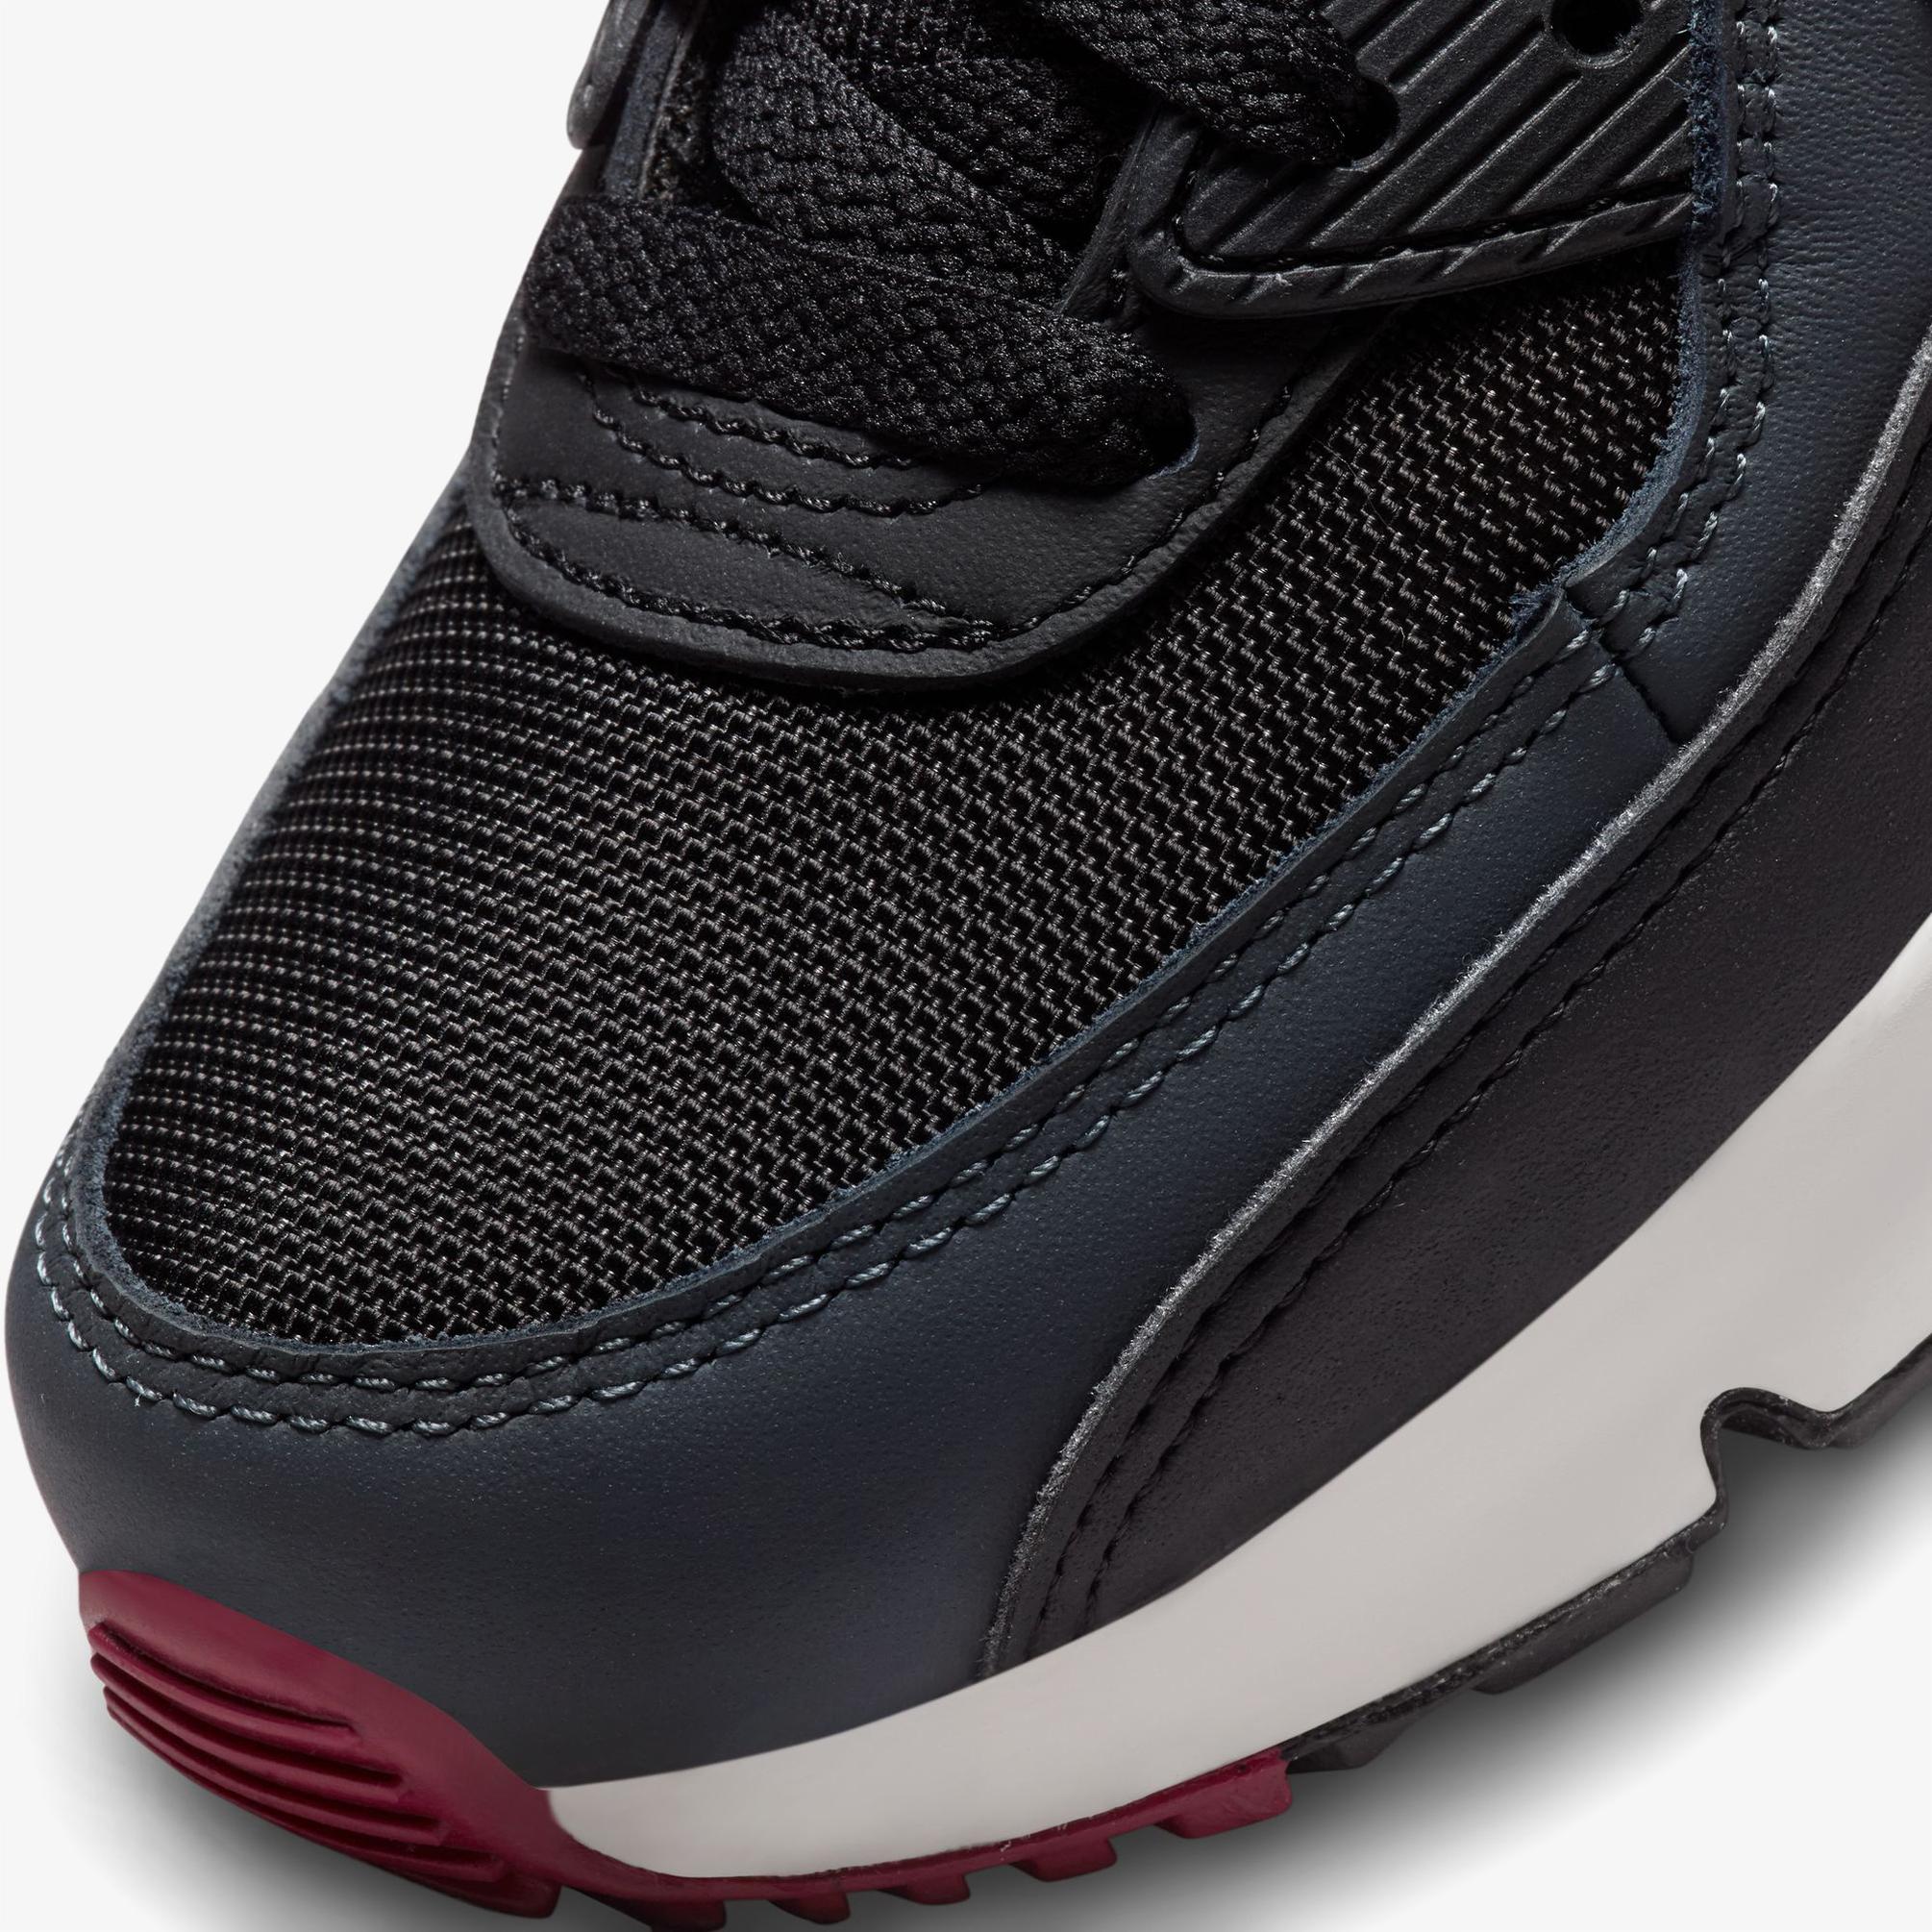  Nike Air Max 90 LTR Çocuk Siyah Spor Ayakkabı